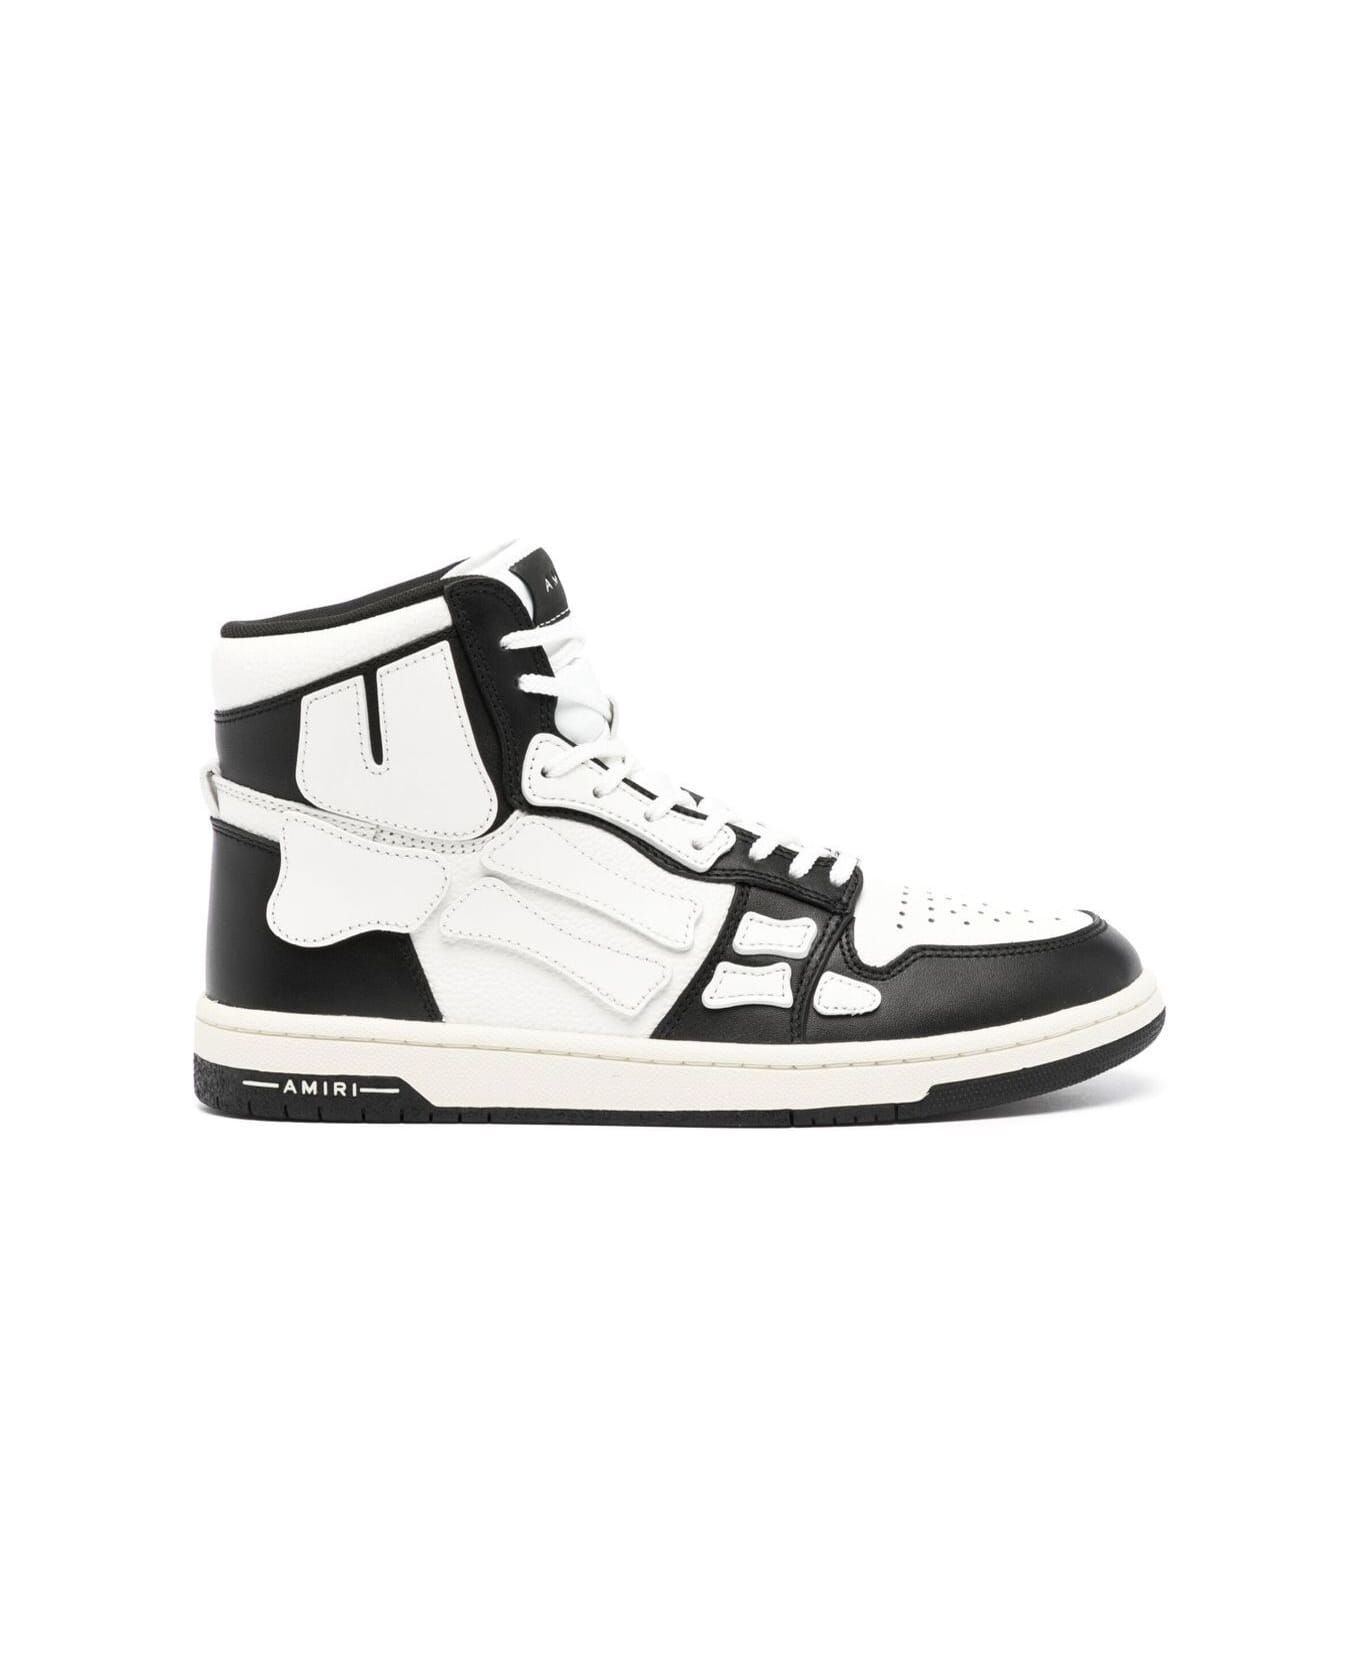 AMIRI Black And White 'skel Hi Top' Sneakers In Calf Leather Man - White/black